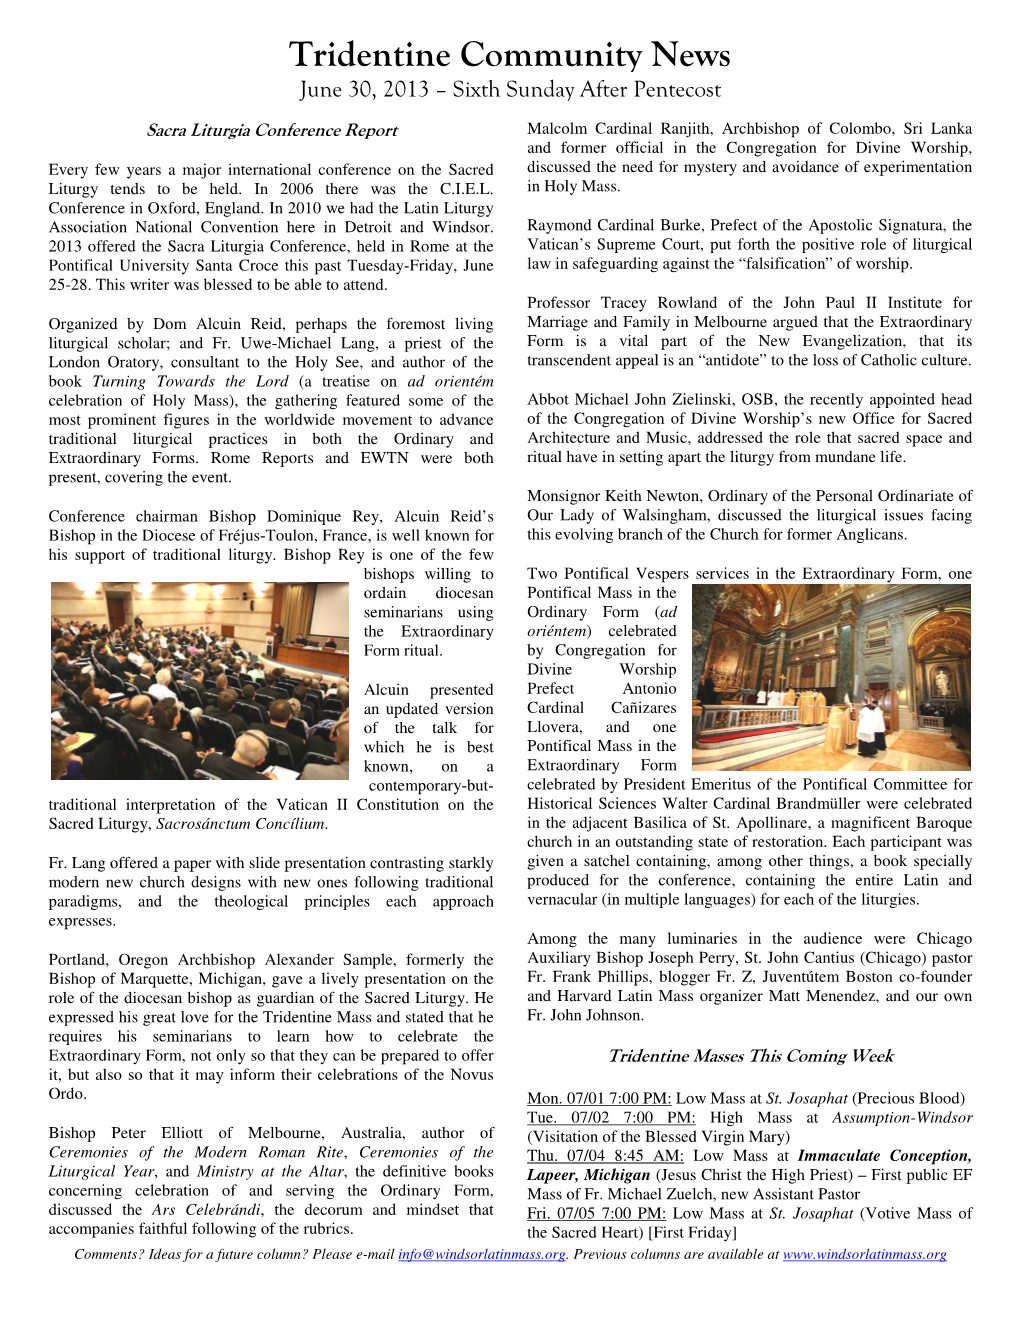 Sacra Liturgia Conference Report